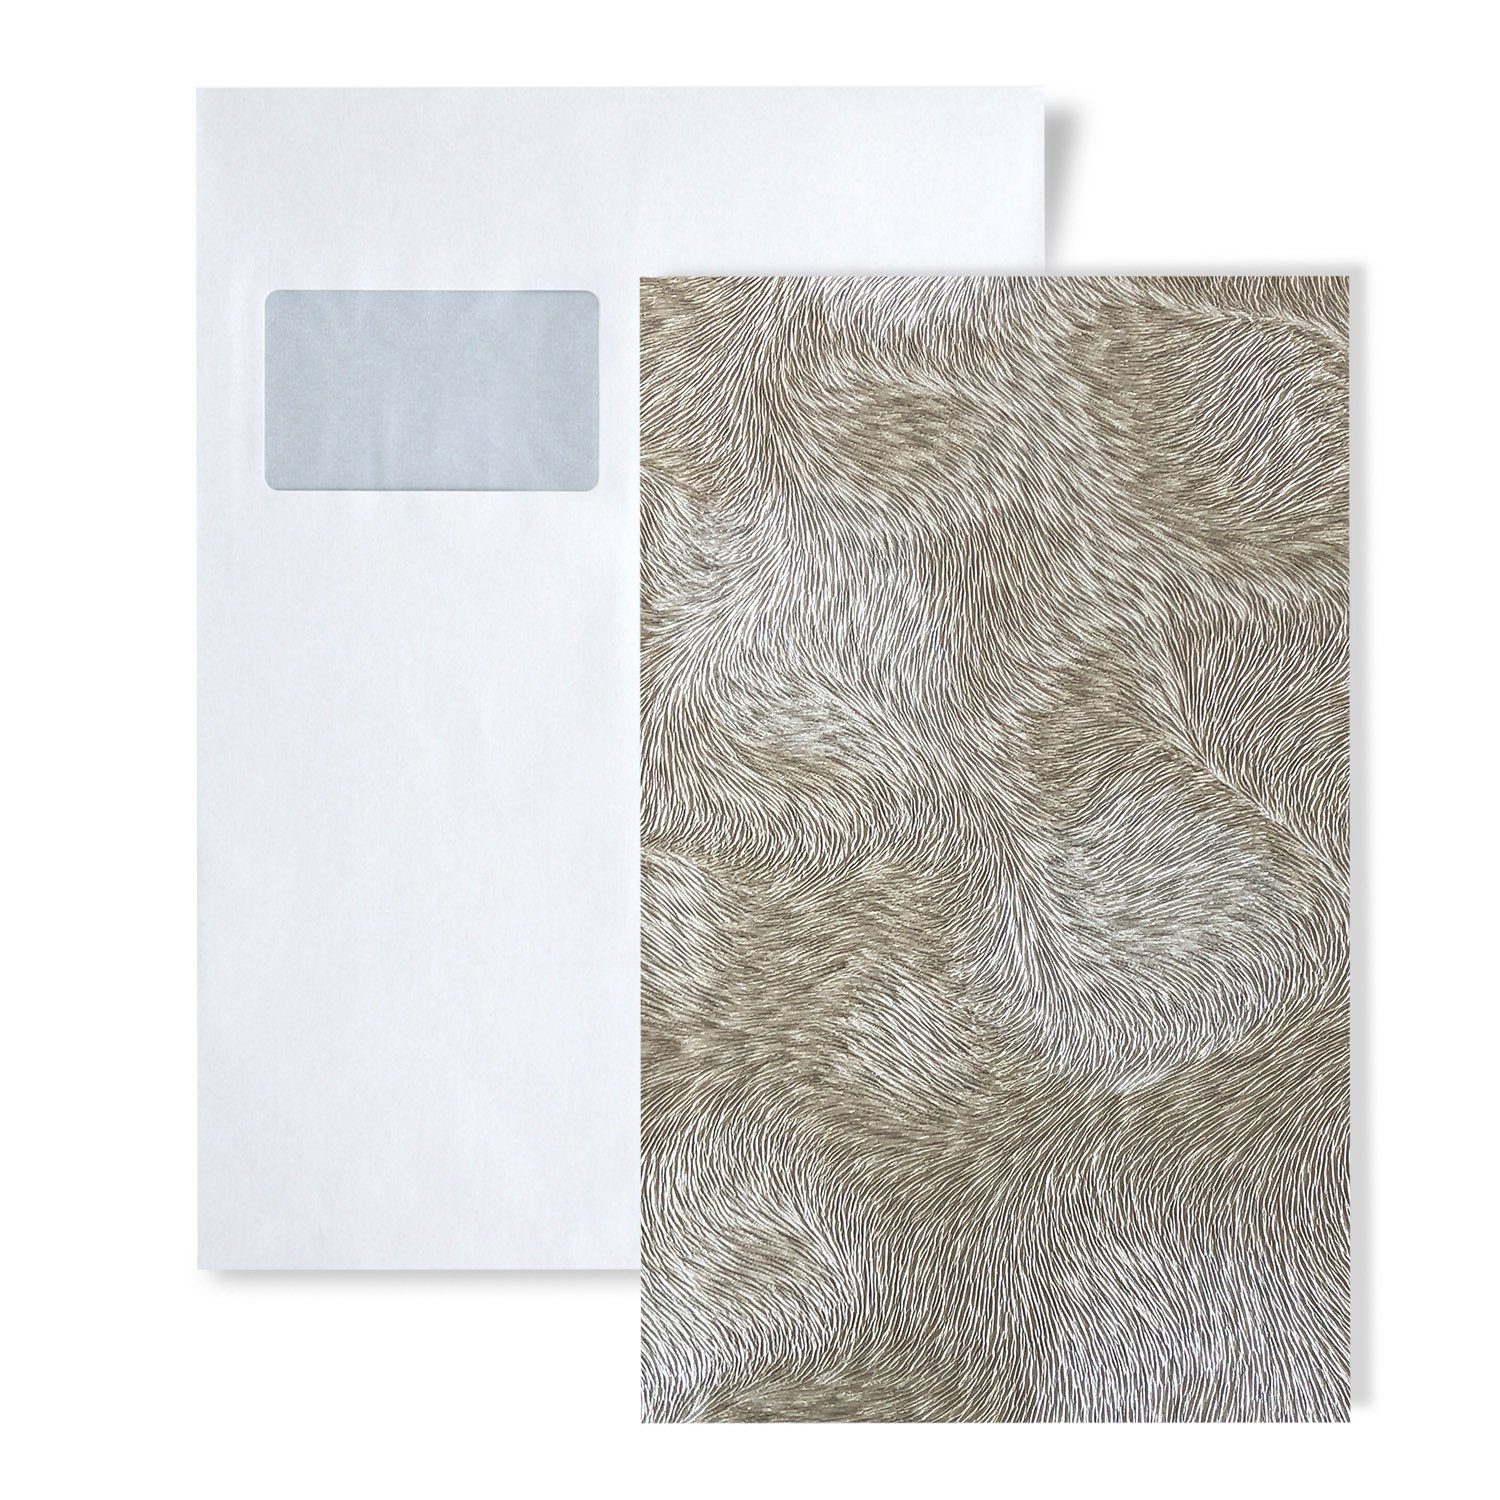 Profhome Prägetapete S-822301, Fellimitat, glänzend, animal print, Motiv, (1 Musterblatt, ca. A5-A4), grau, creme-weiß, beige